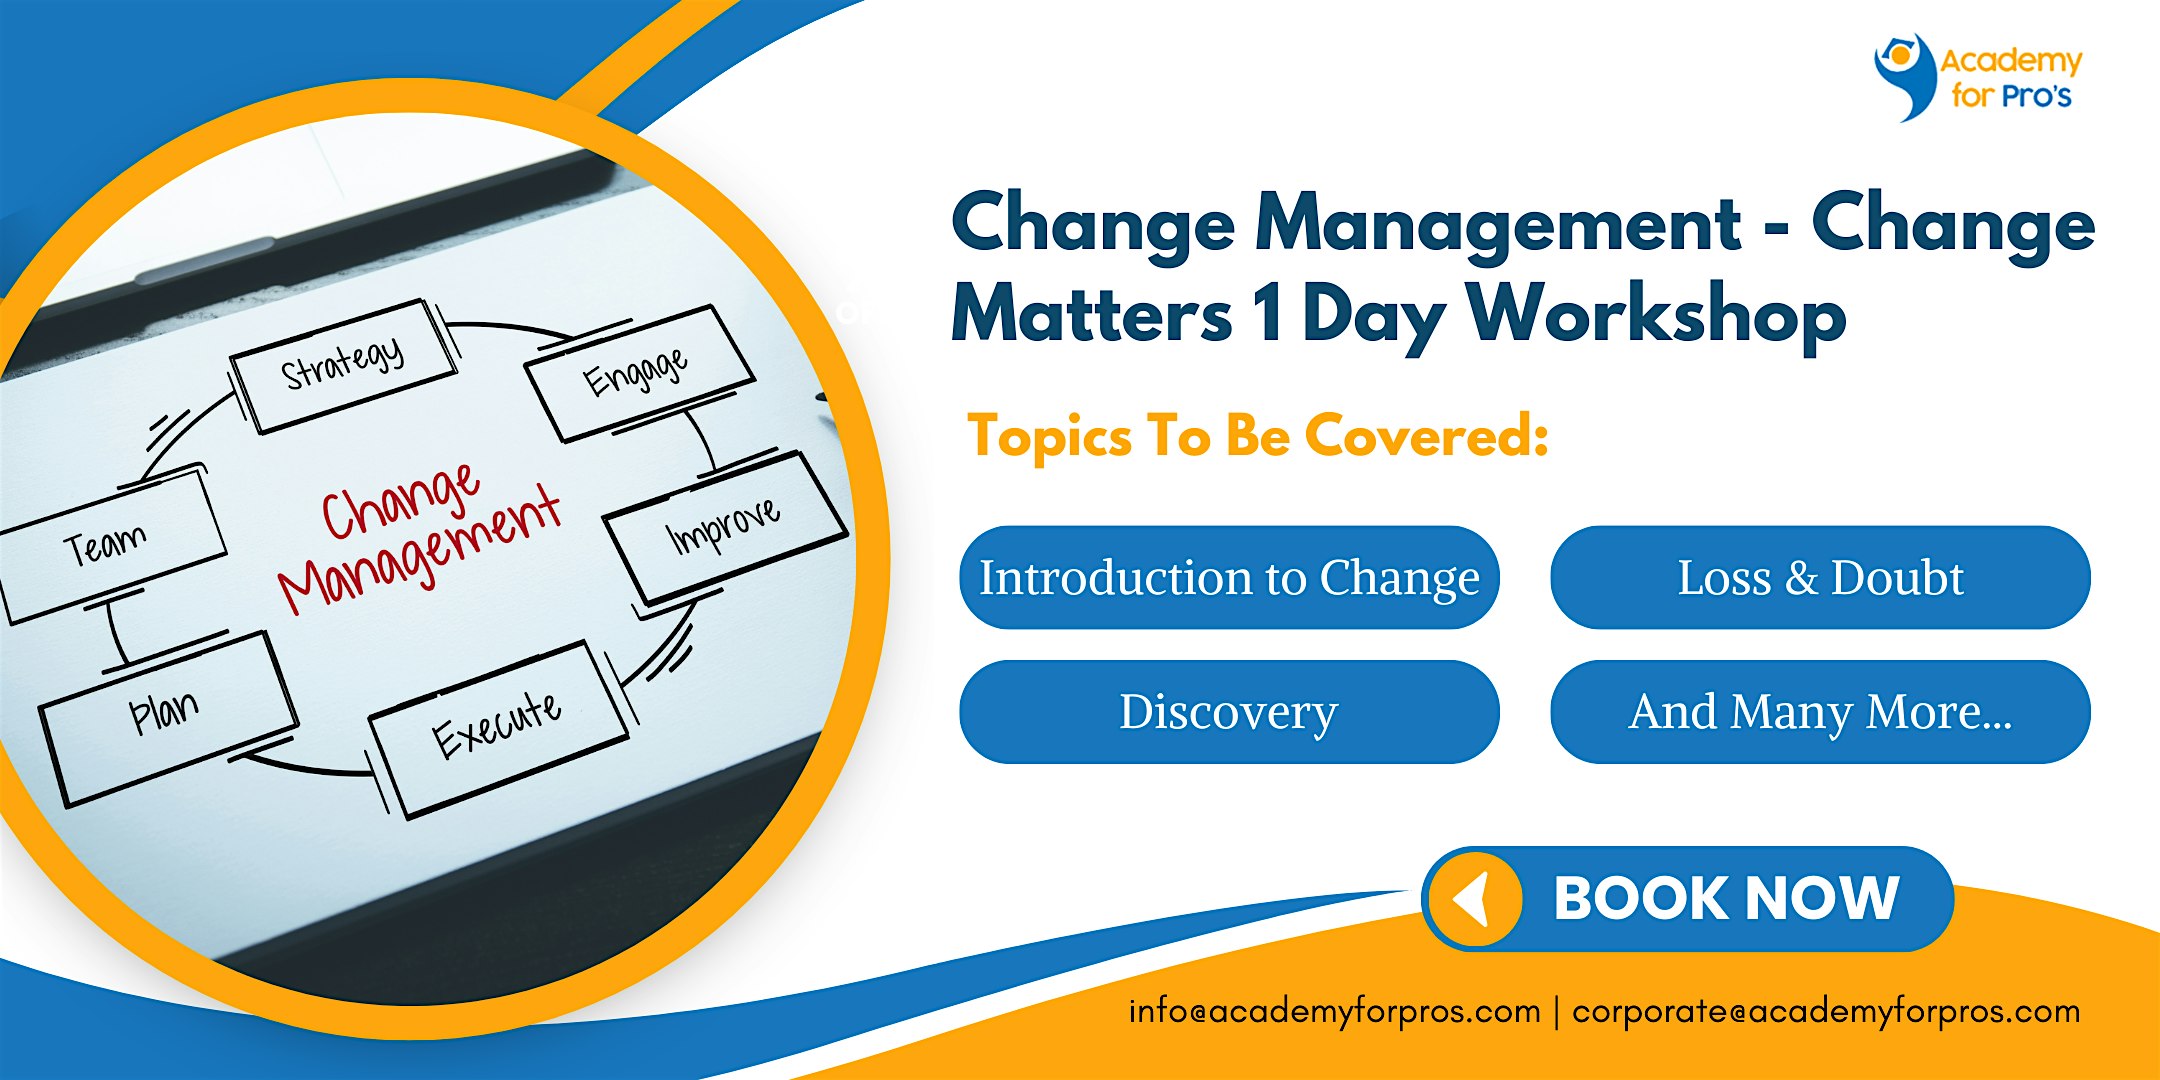 Change Management - Change Matters 1 Day Workshop in Dayton, OH